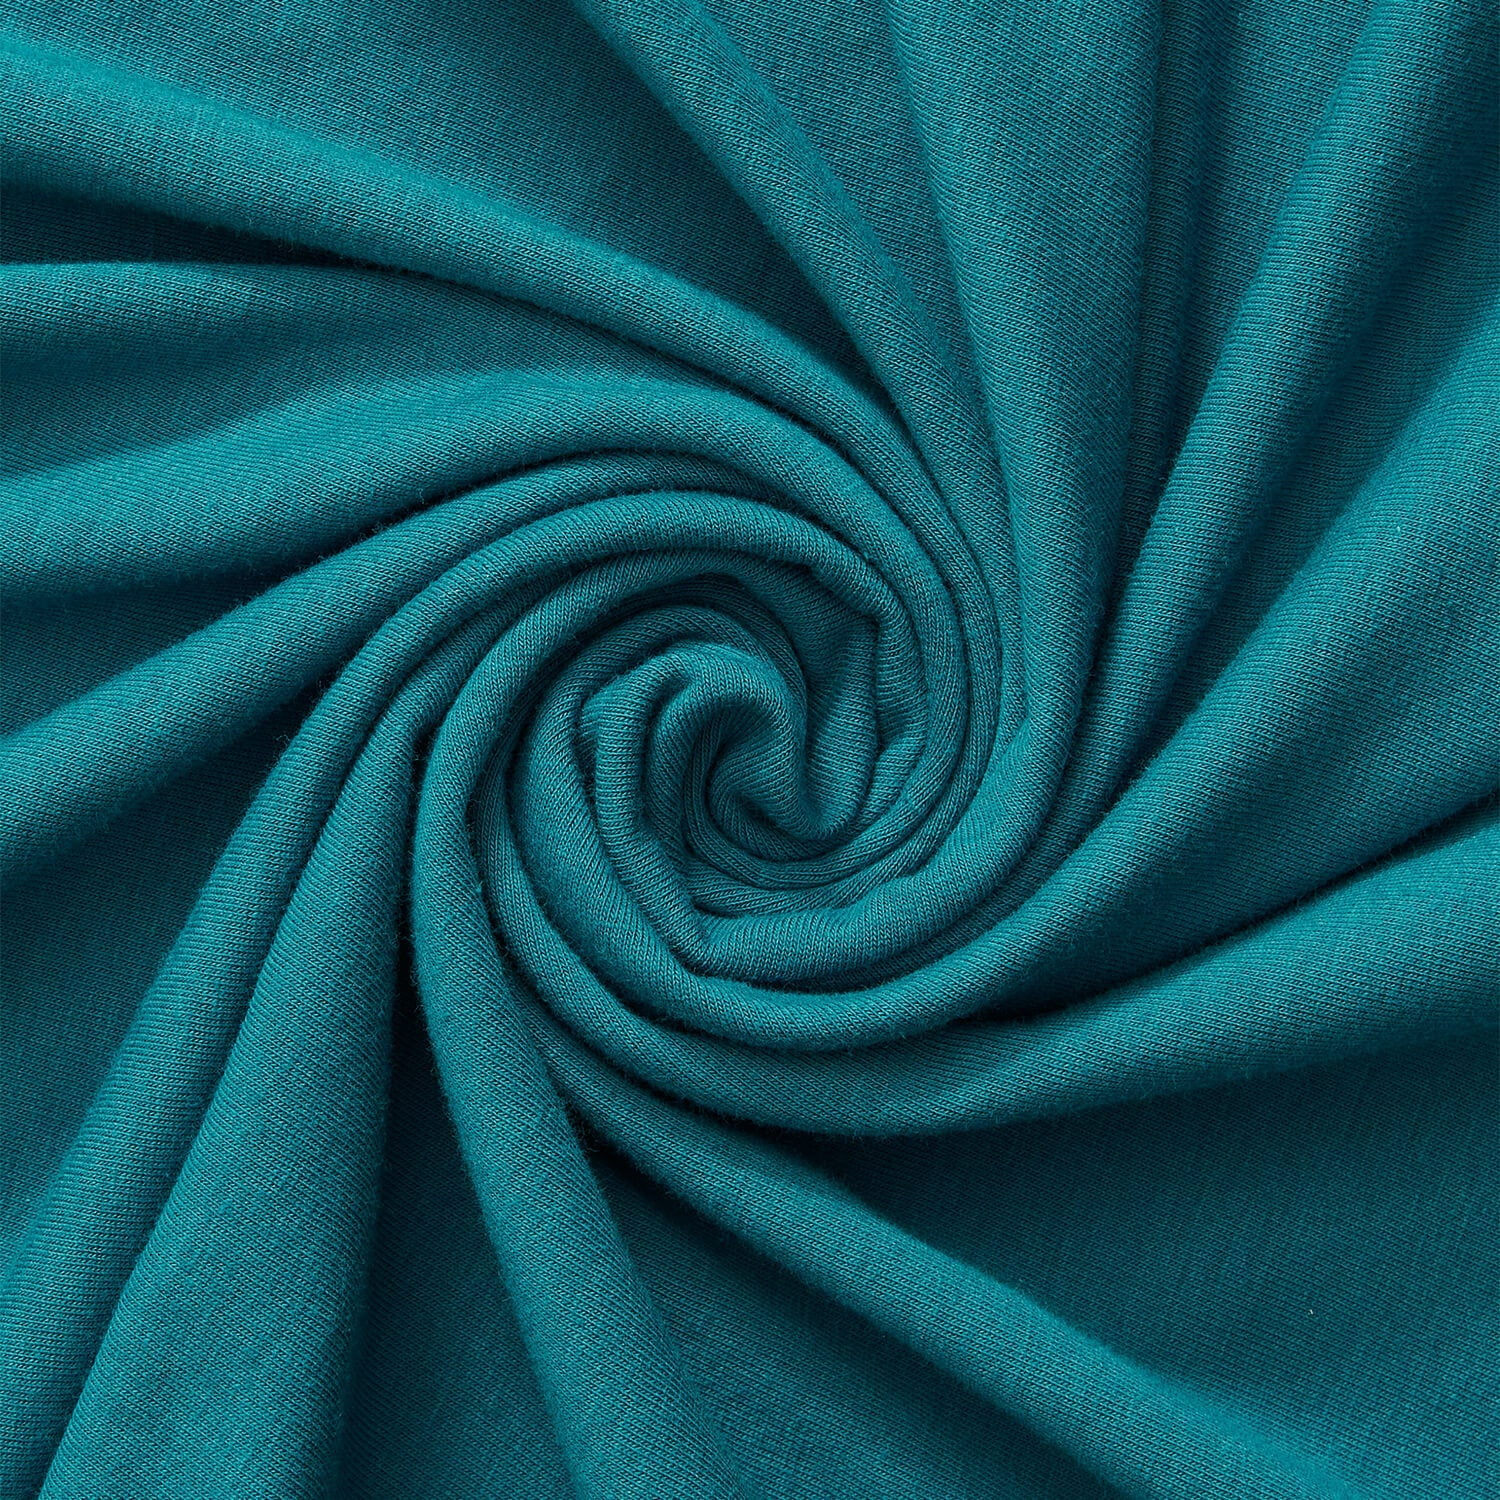 Cotton Jersey Lycra Spandex Knit Stretch Fabric 58/60 inch Wide (Purple)